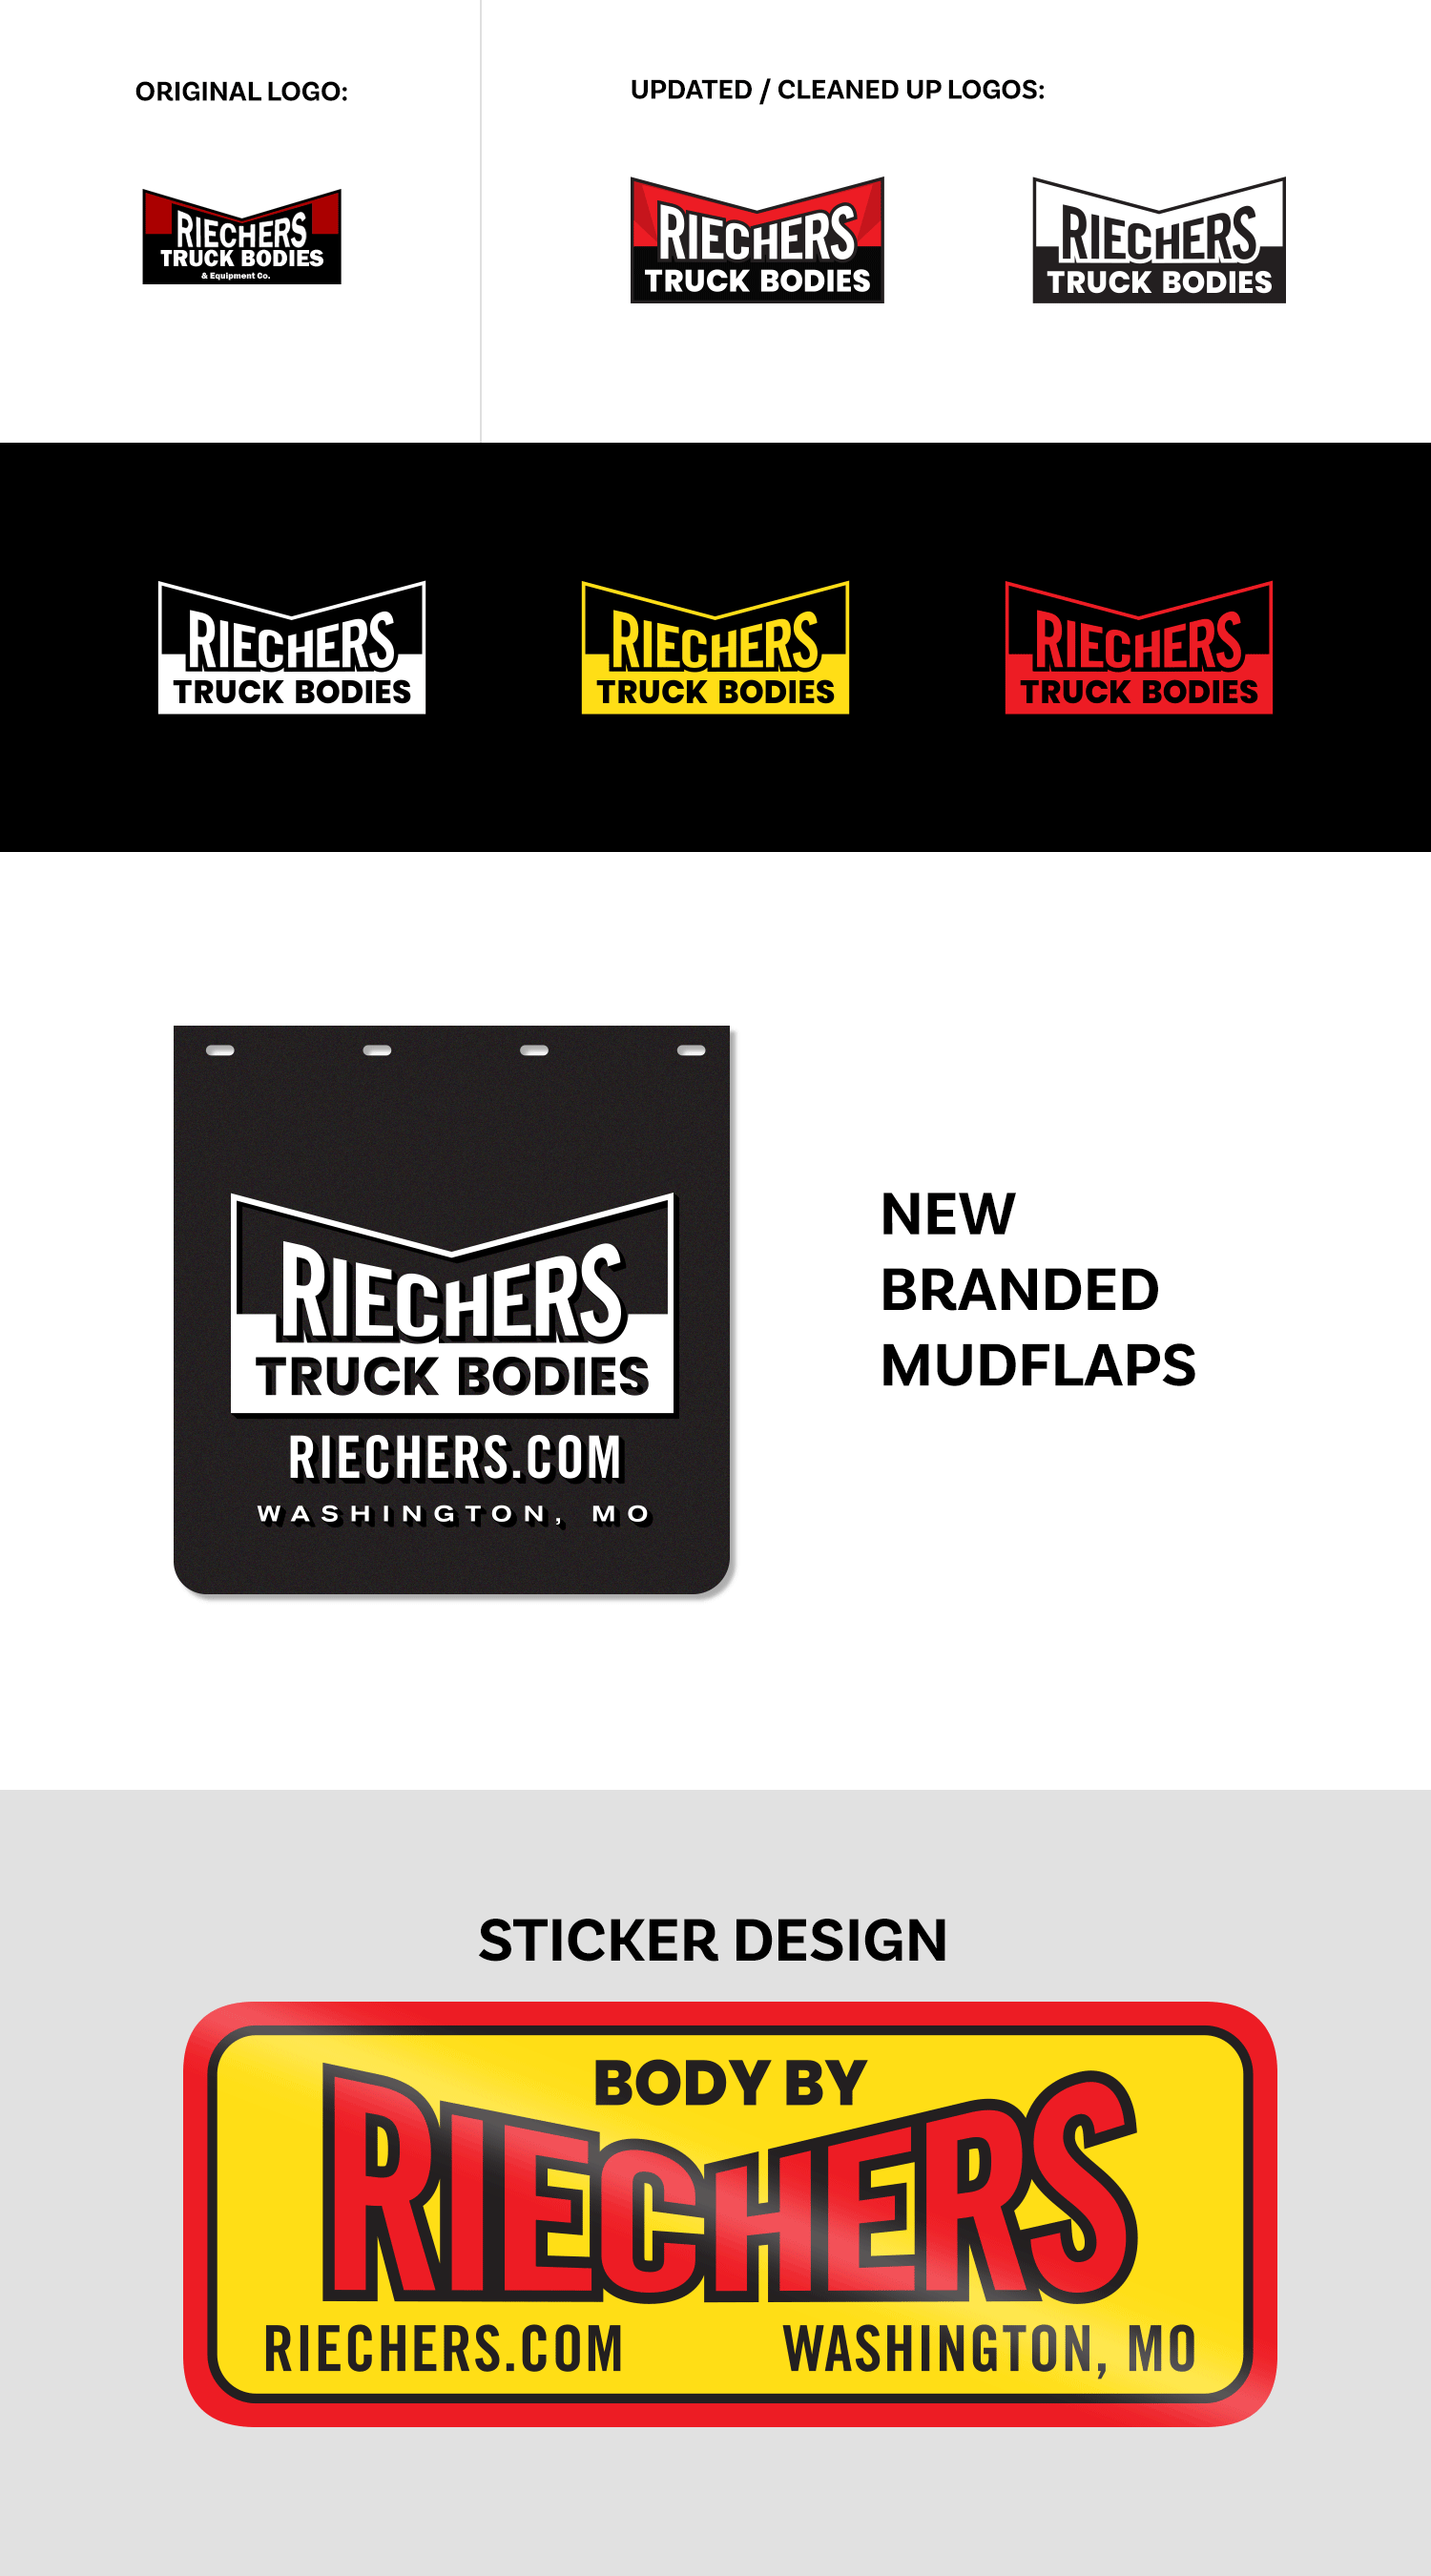 Riechers upgraded logo